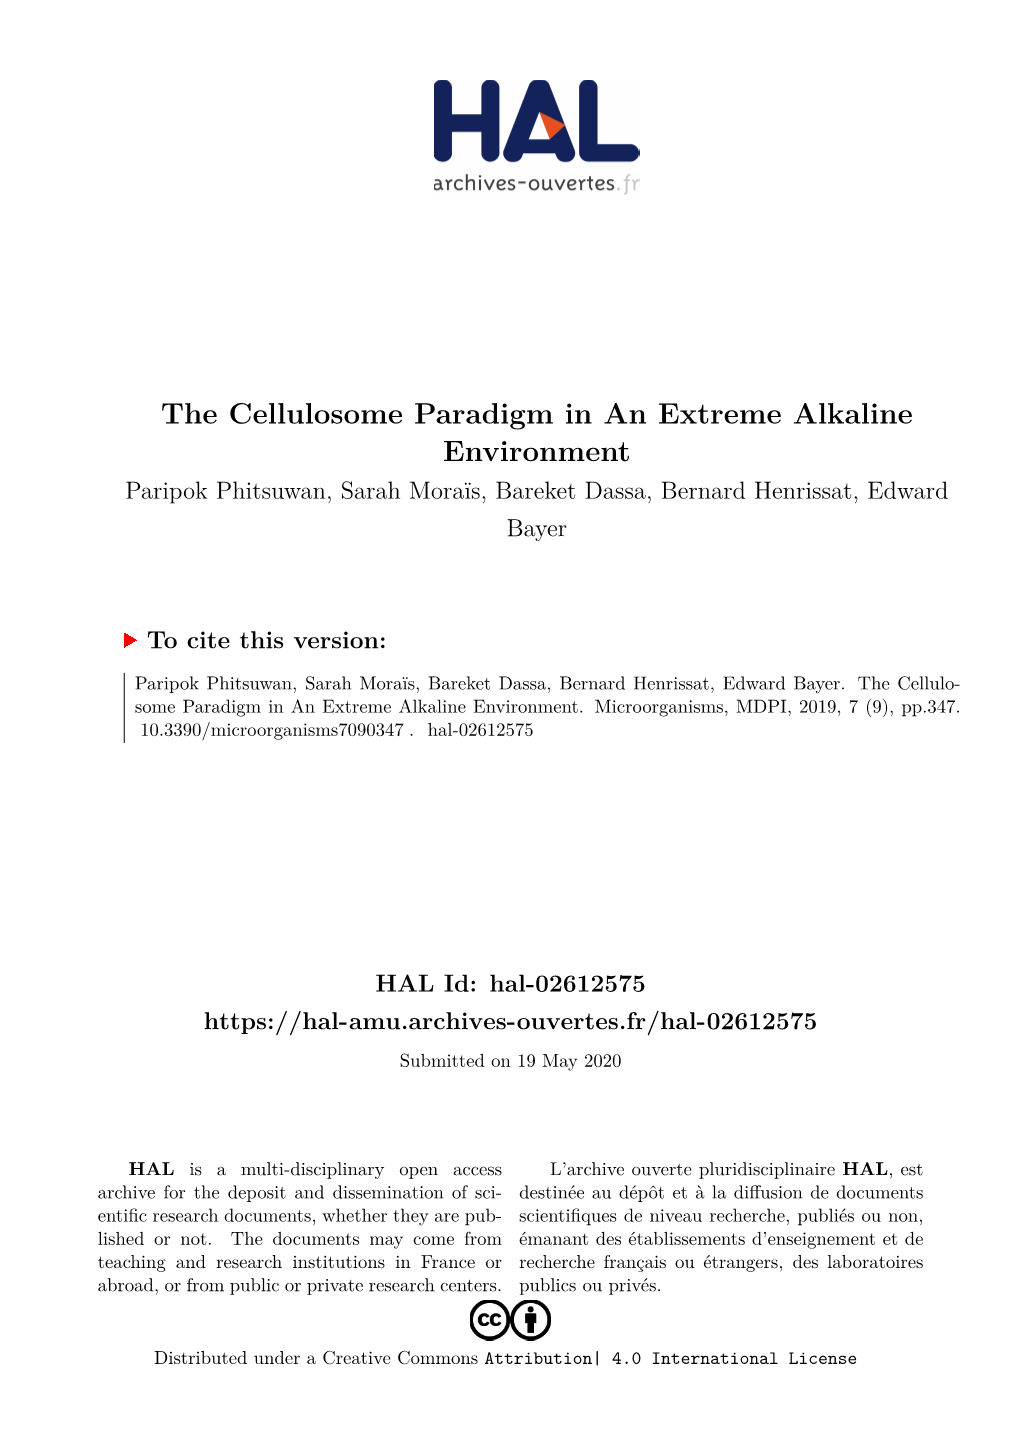 The Cellulosome Paradigm in an Extreme Alkaline Environment Paripok Phitsuwan, Sarah Moraïs, Bareket Dassa, Bernard Henrissat, Edward Bayer